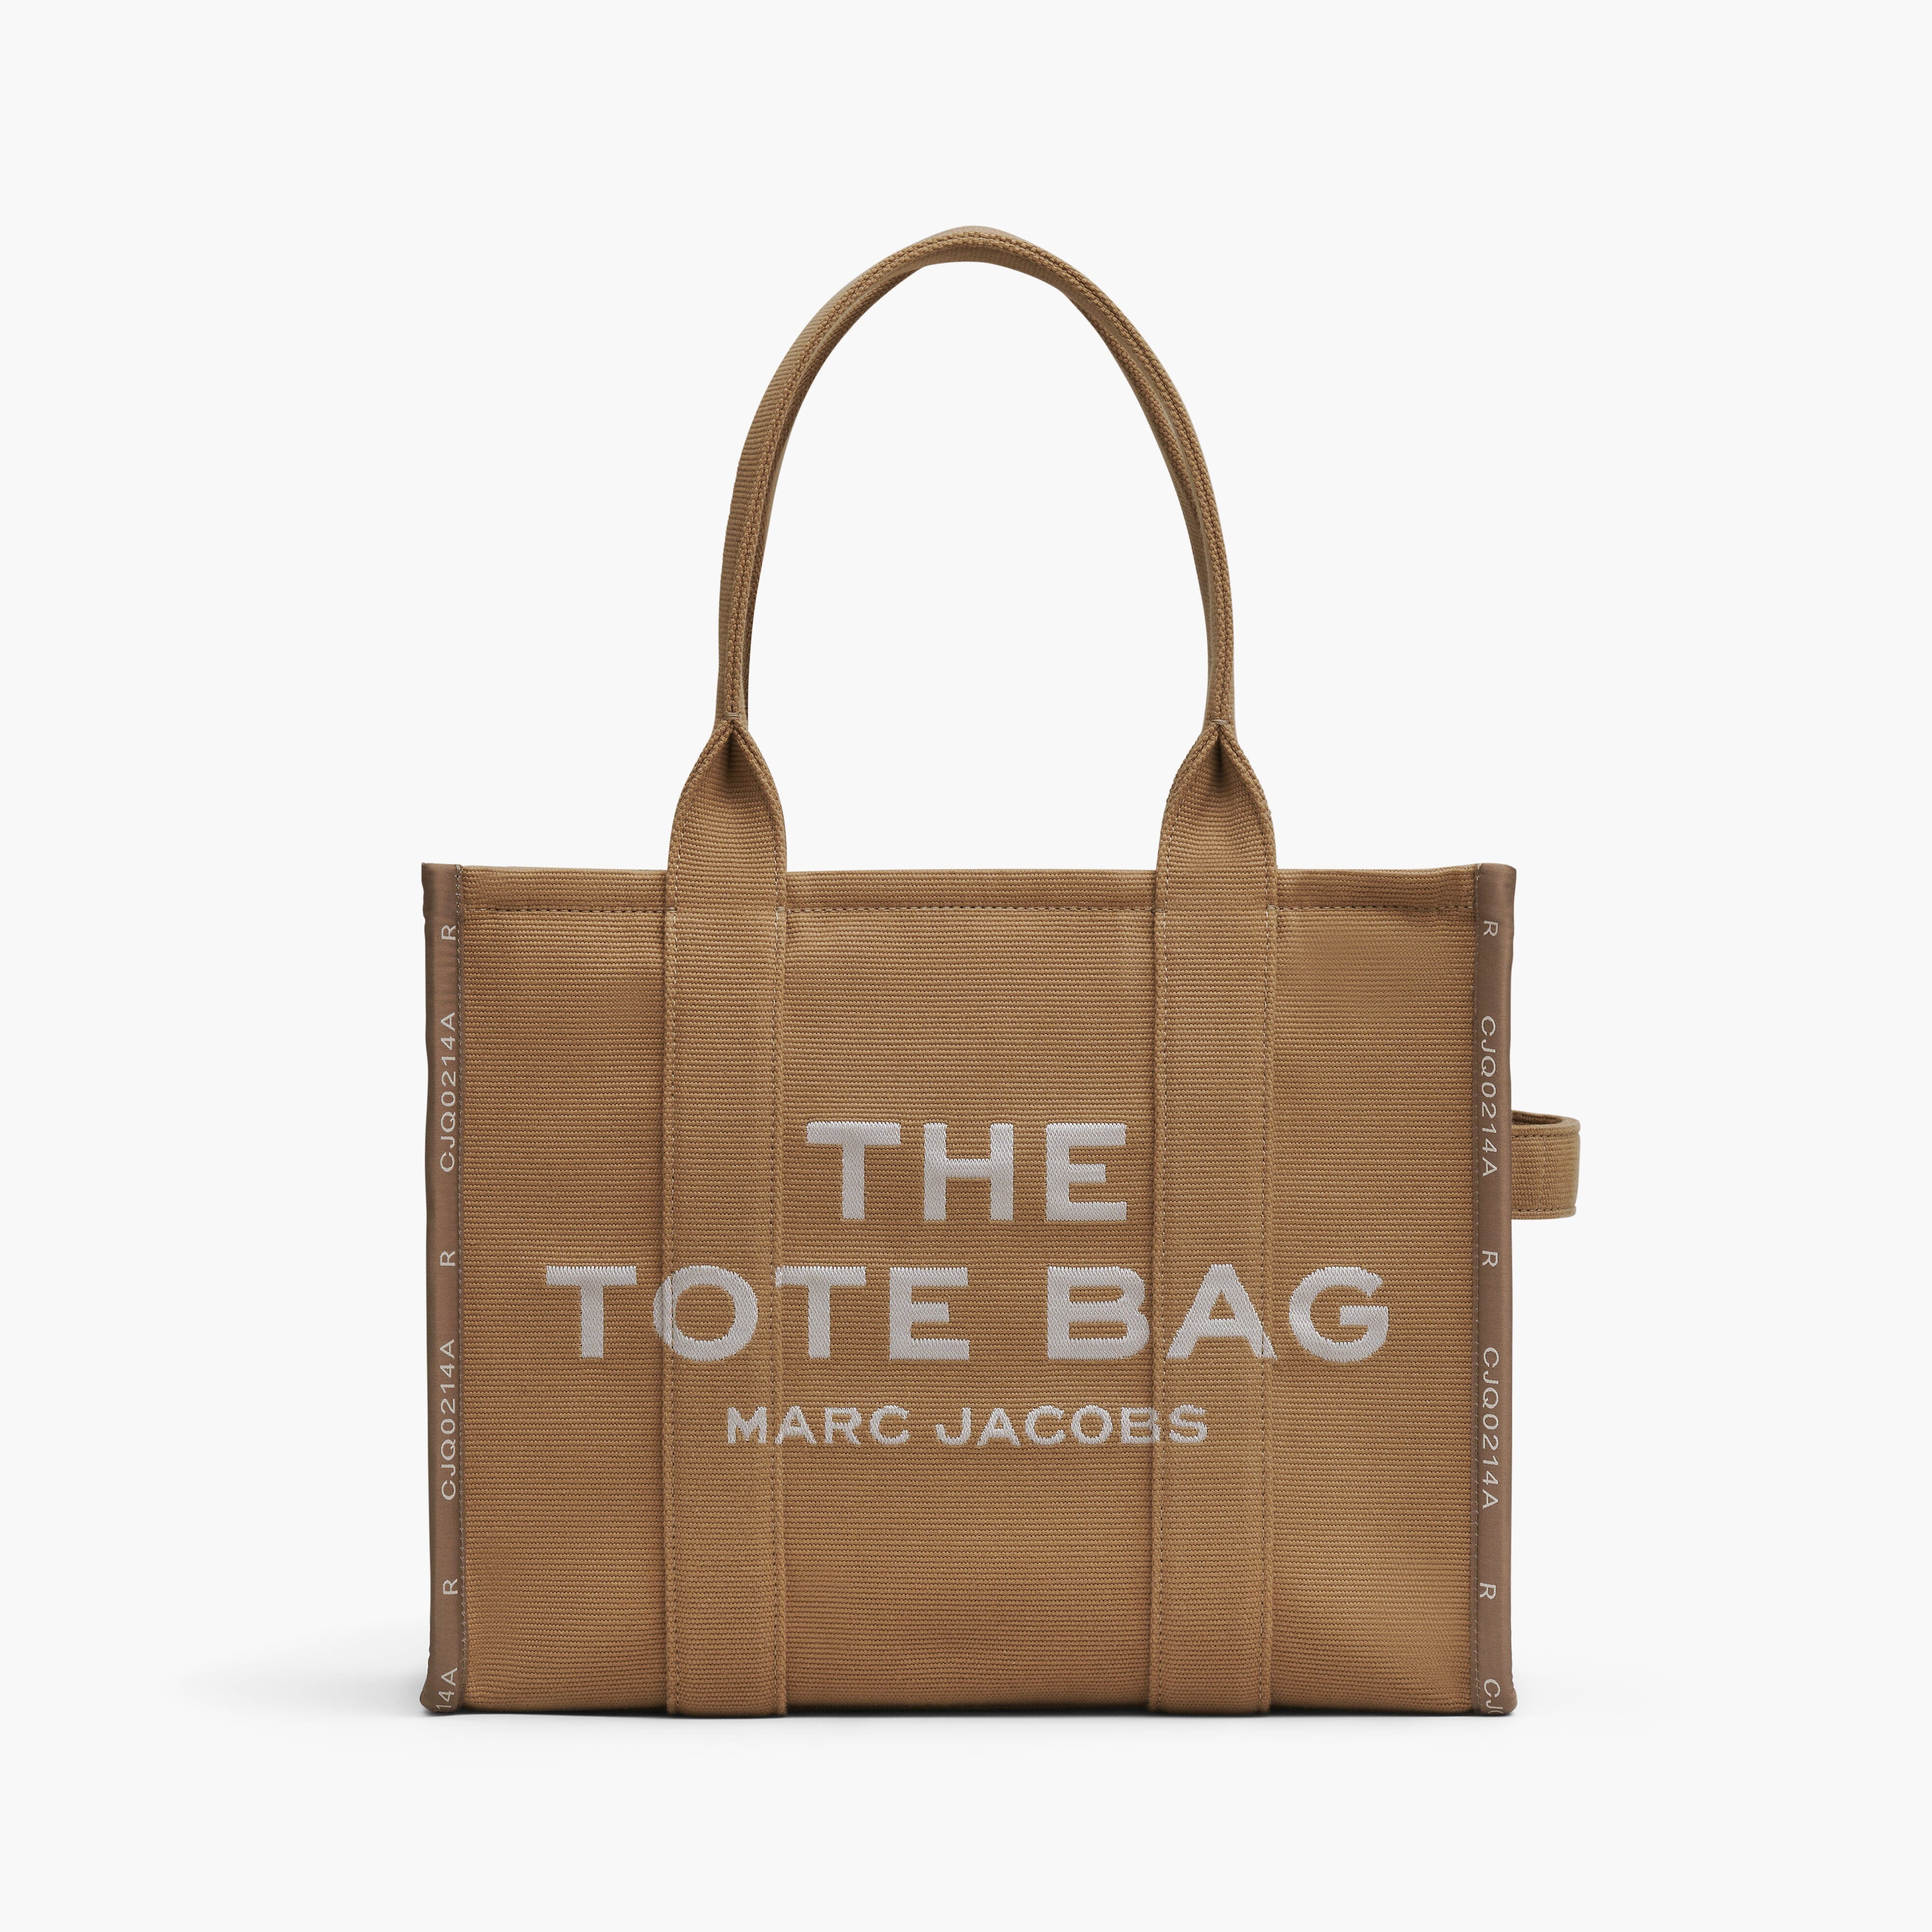 MARC JACOBS - M0017048-230 - The Large Tote Bag - Camel Borse Marc Jacobs 